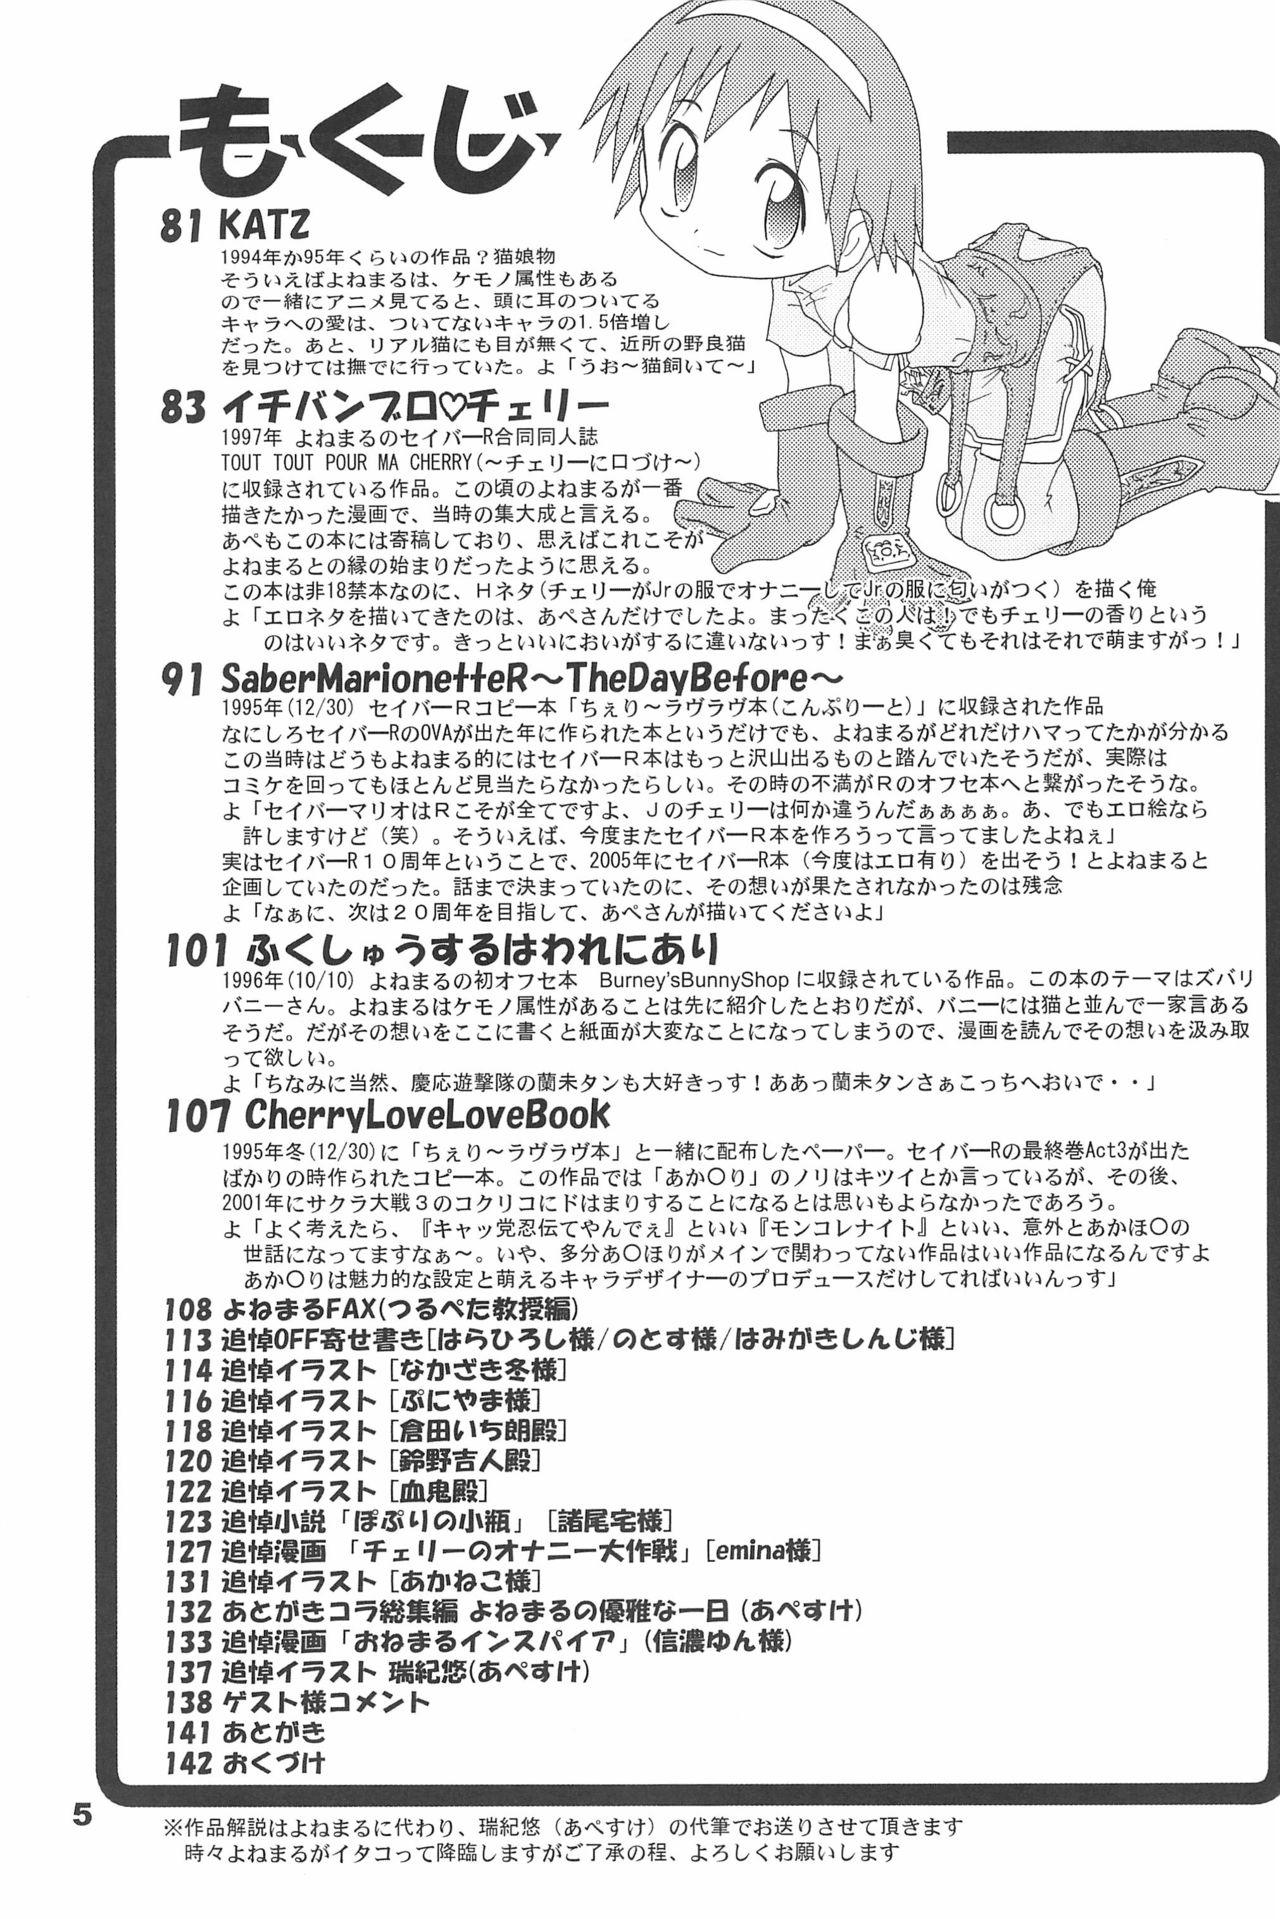 8teenxxx Yonemaru Archive 2 - Fun fun pharmacy Saber marionette True love story Princess tutu Asia - Page 5